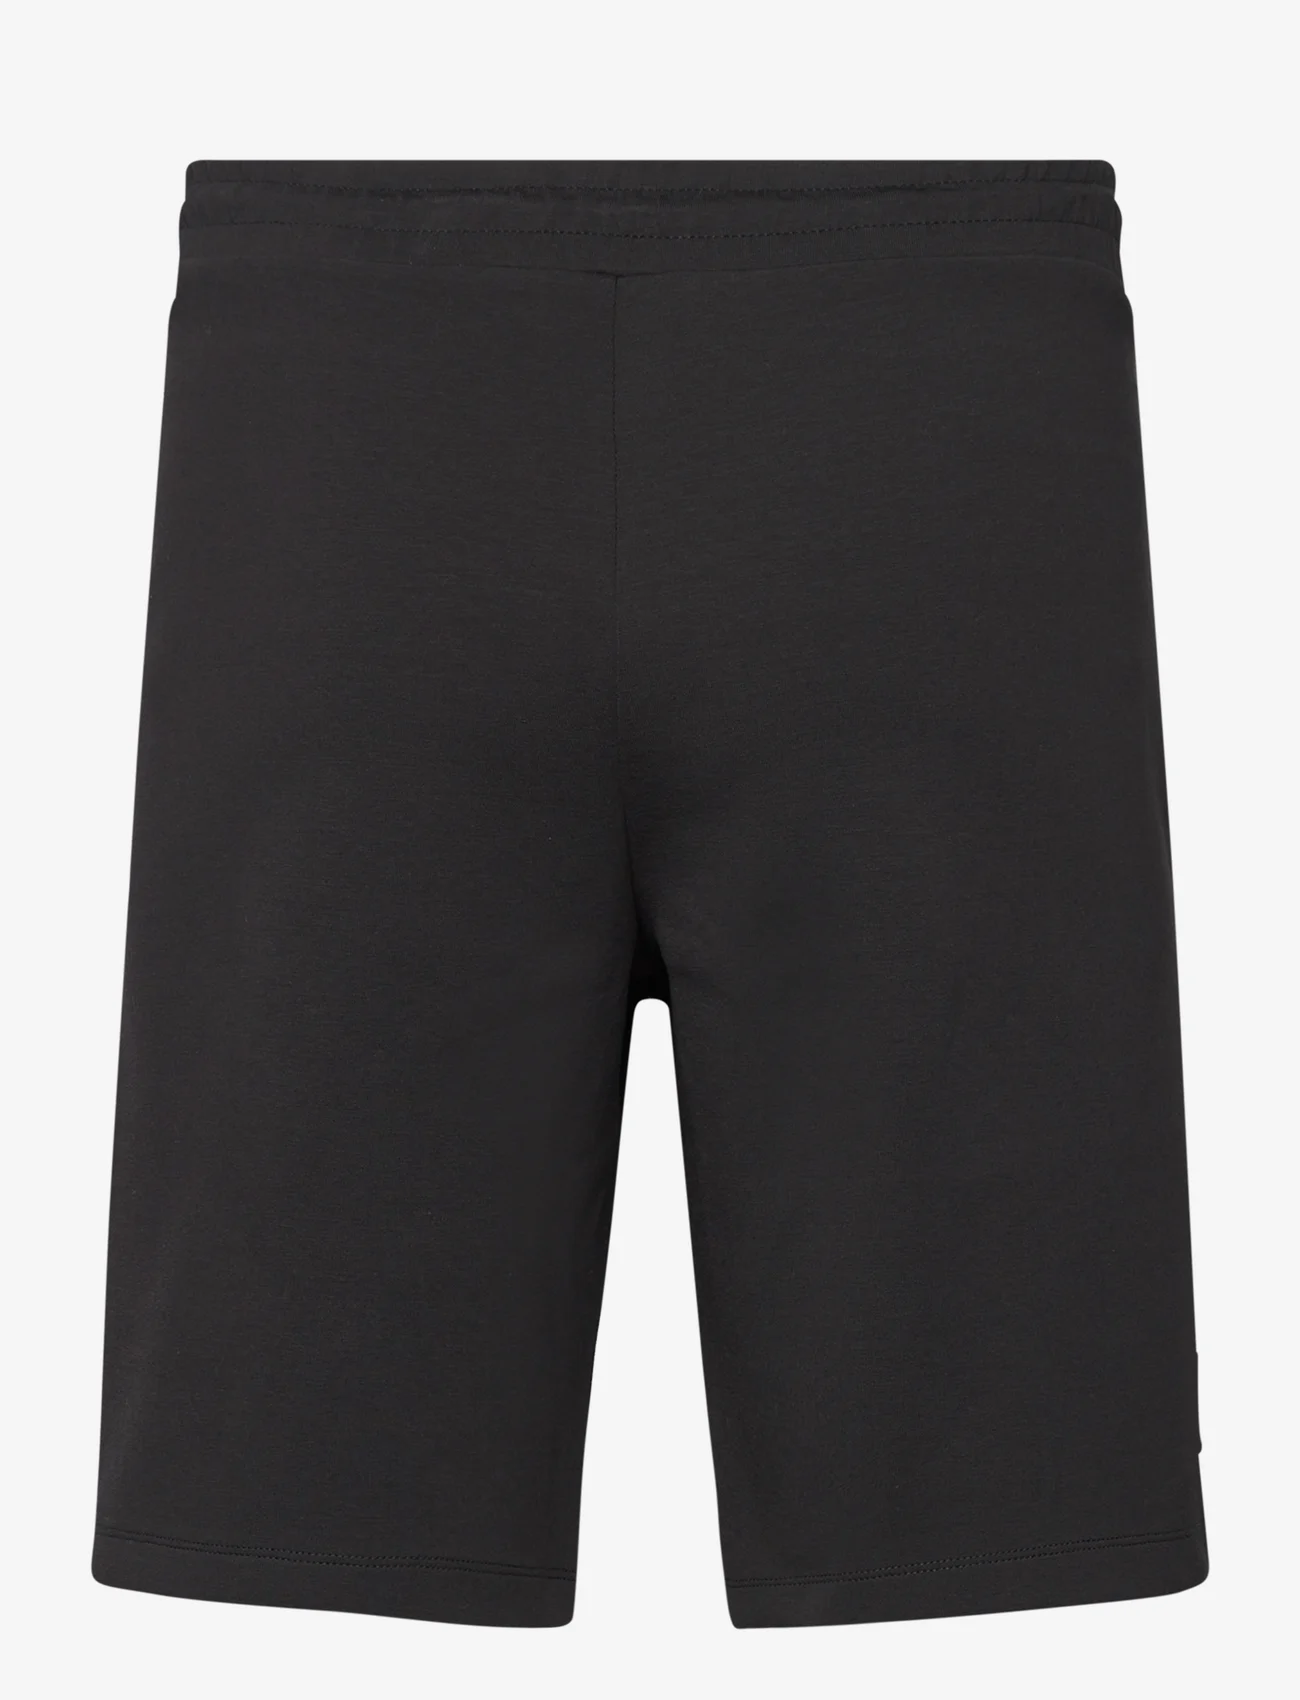 EA7 - BERMUDA - sports shorts - black - 1